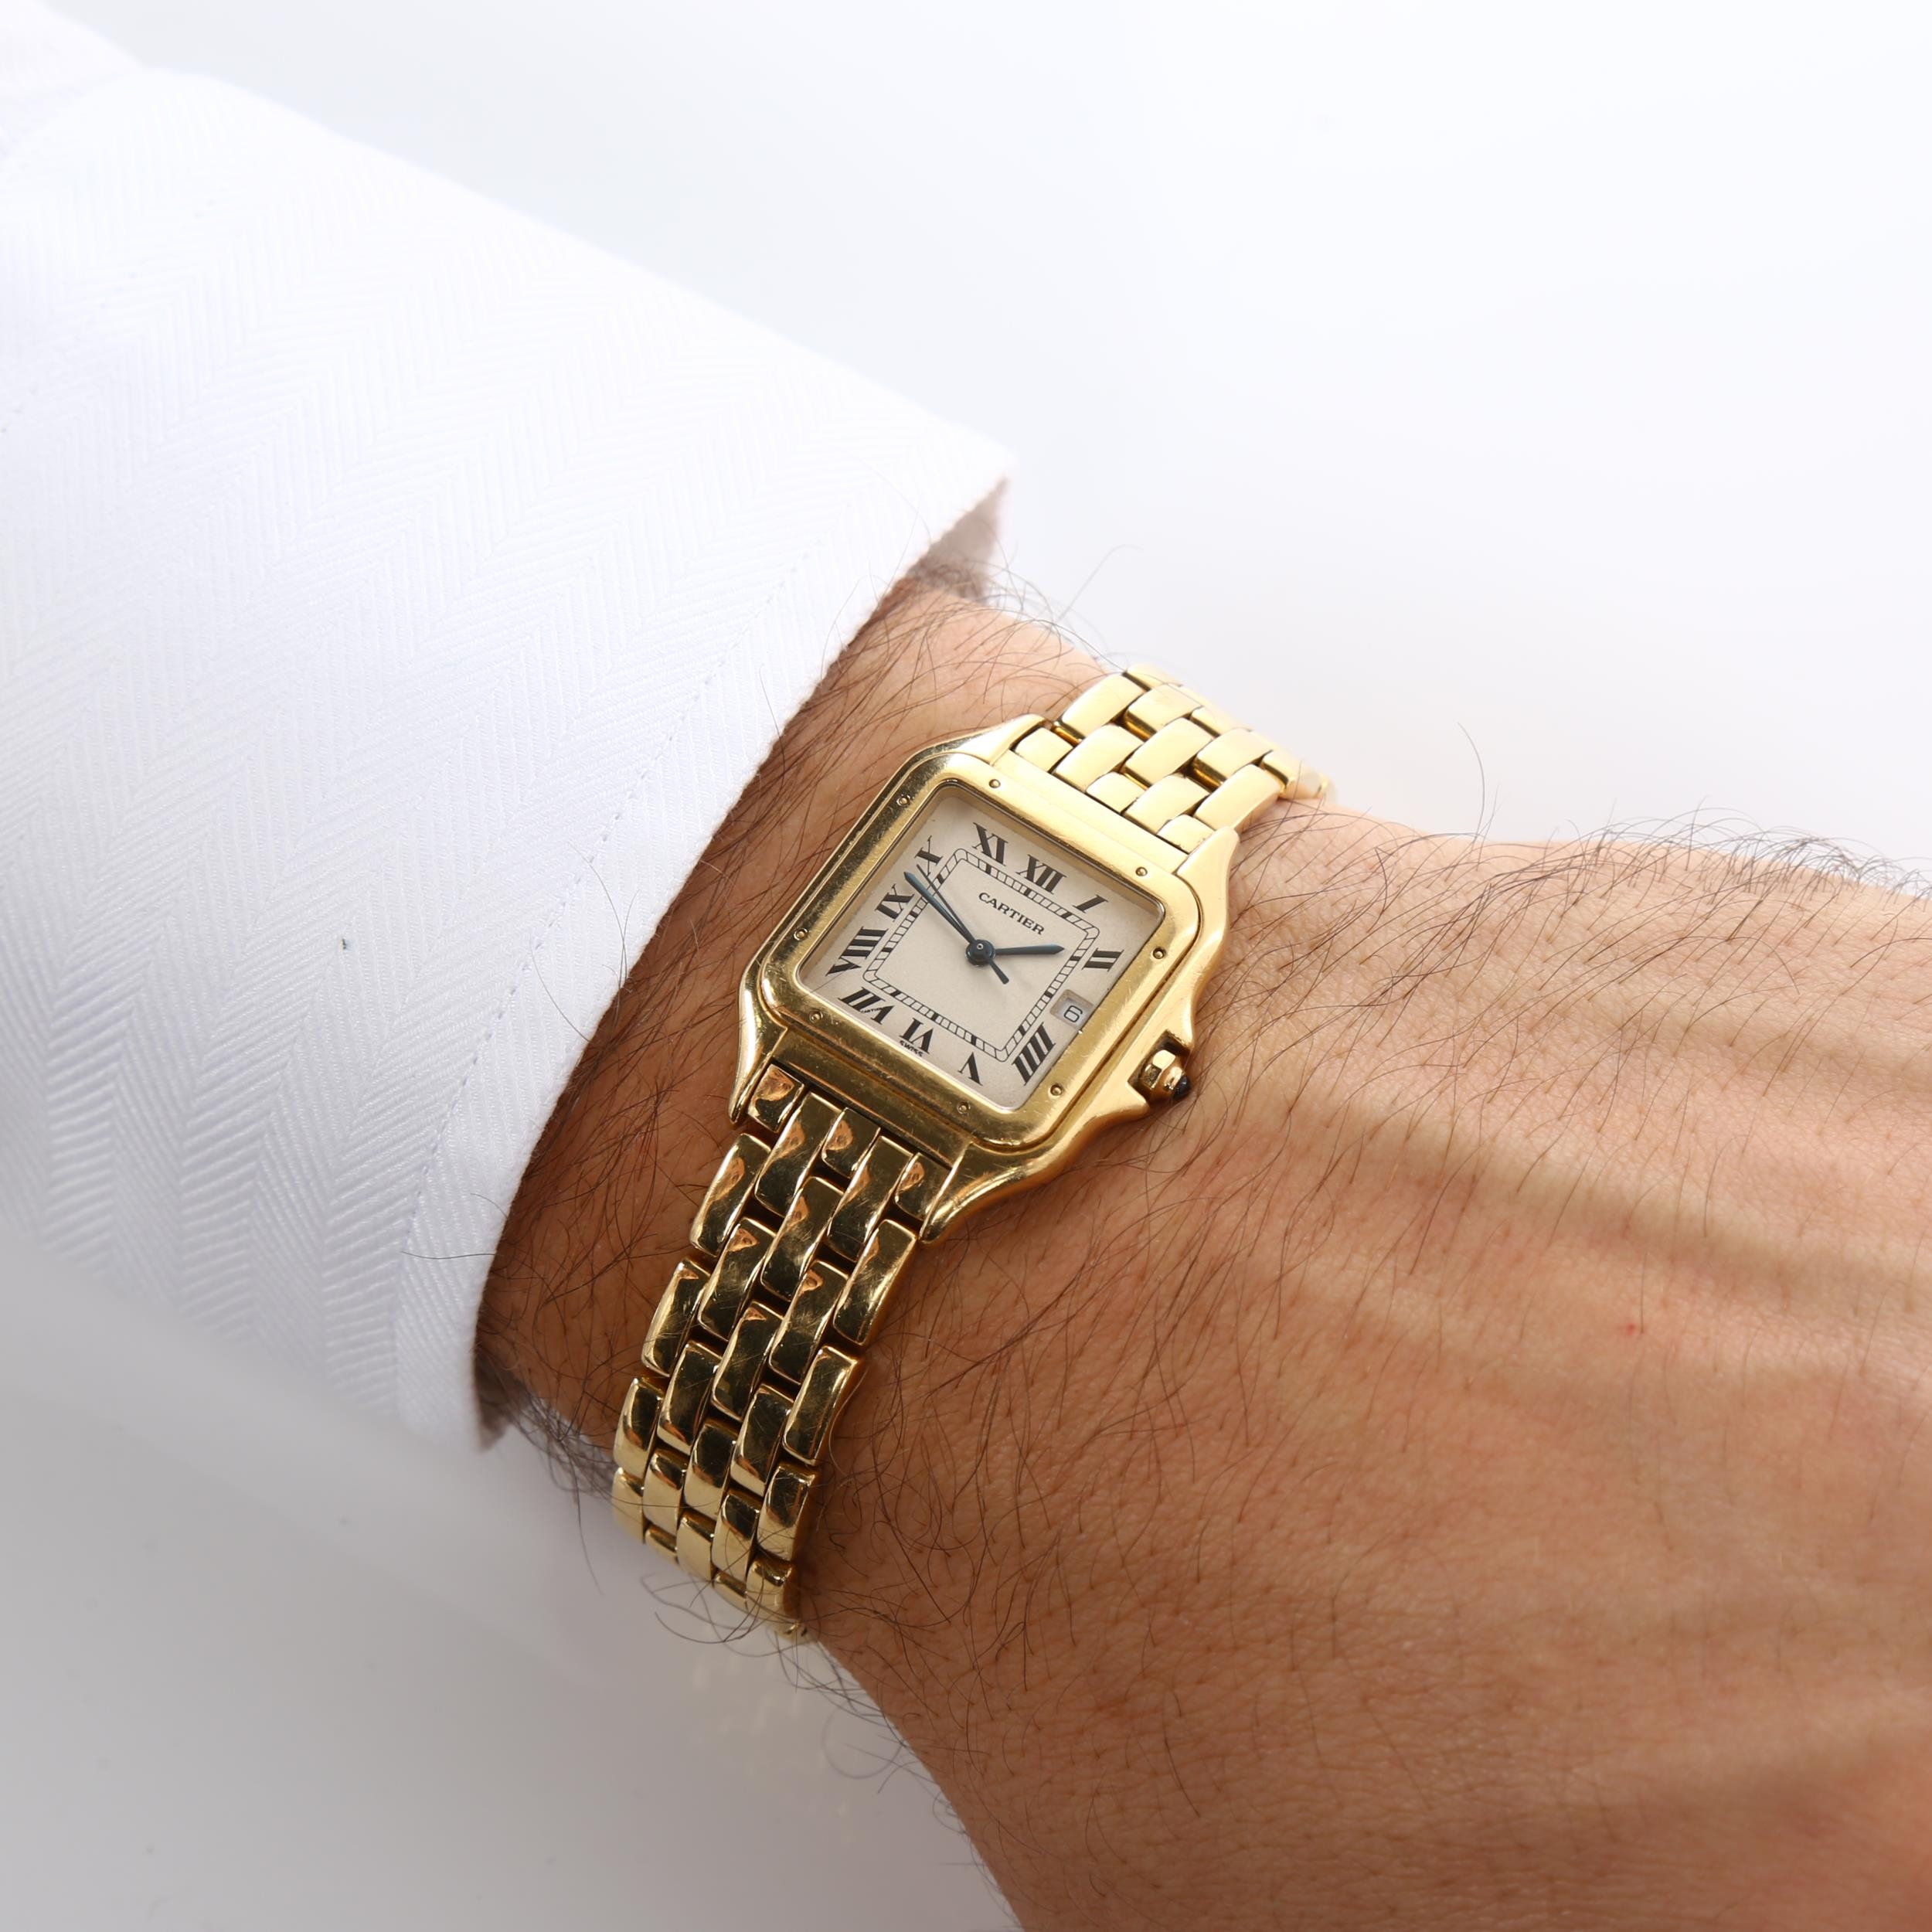 CARTIER - a mid-size 18ct gold Panthere quartz bracelet watch, ref. 8839, circa 1990s, pale - Image 5 of 7